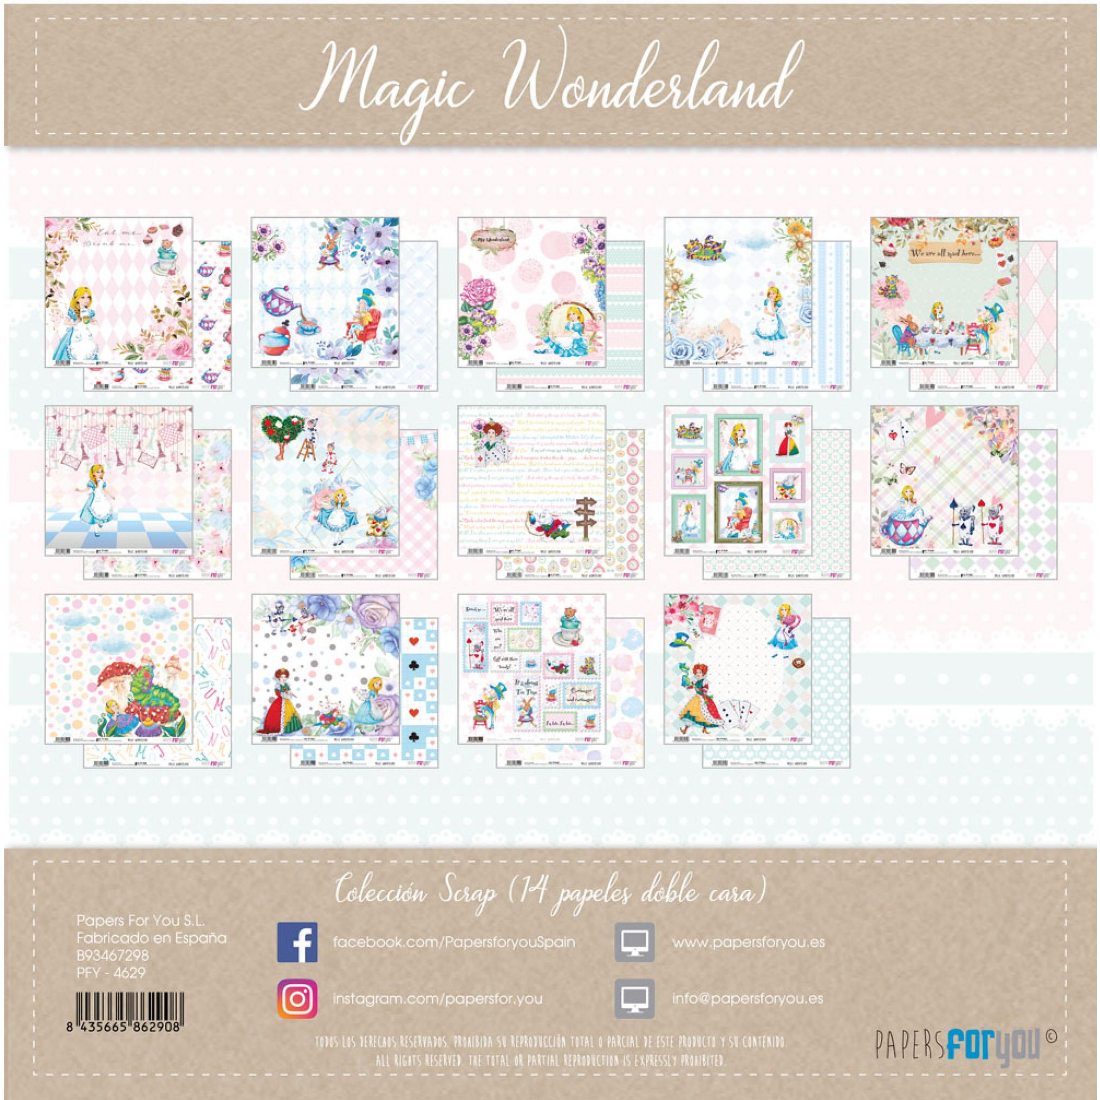 Bloco Papel Scrapbooking Magic Wonderland PFY-4629 papersforyou